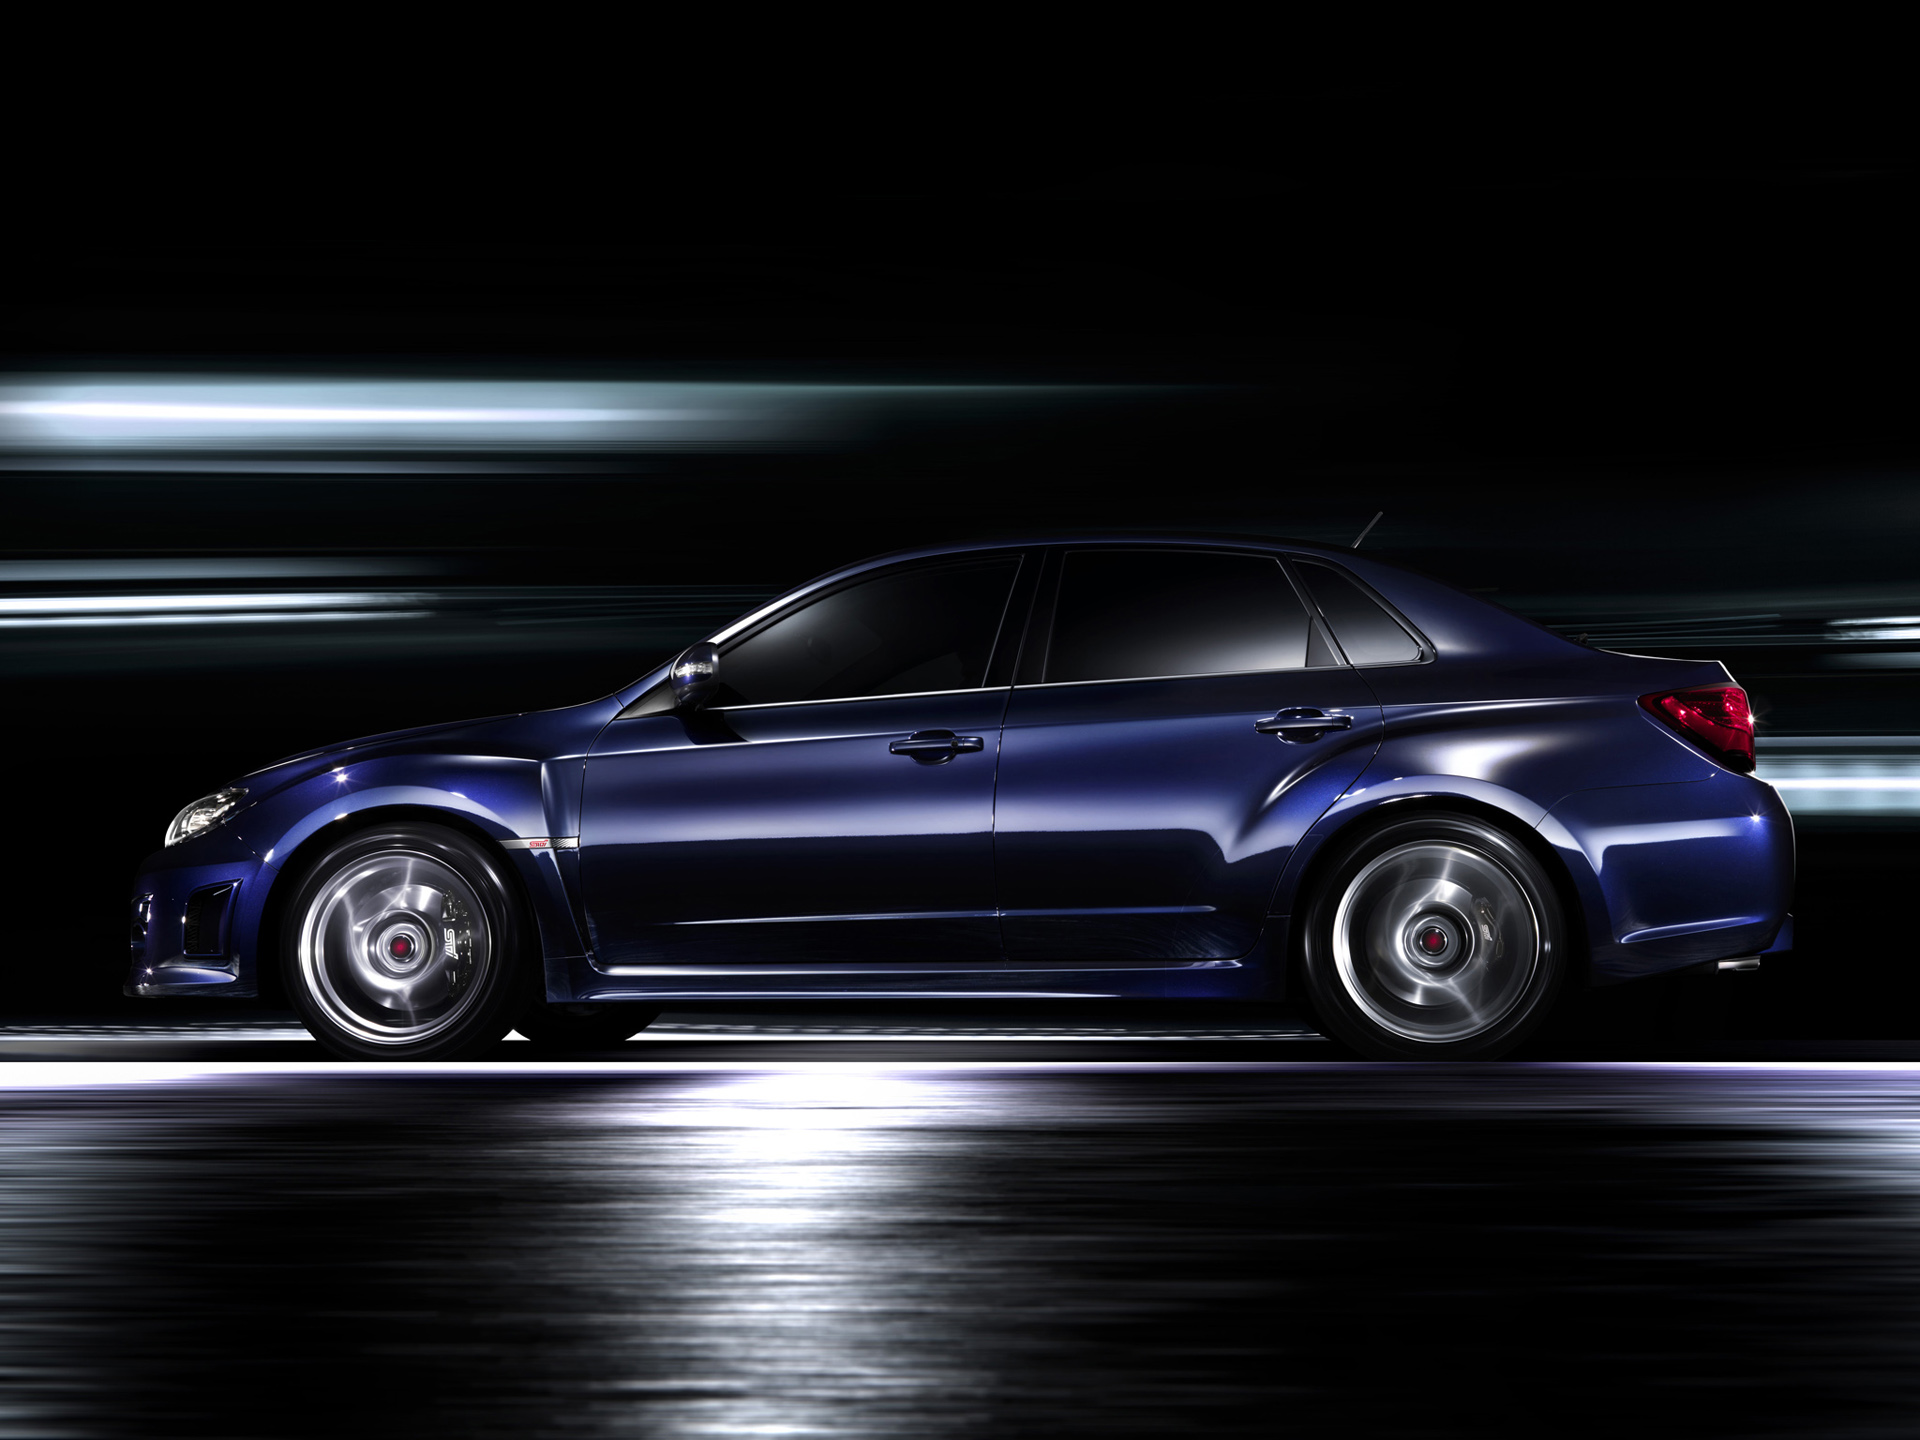  2010 Subaru Impreza WRX STI A-Line Wallpaper.